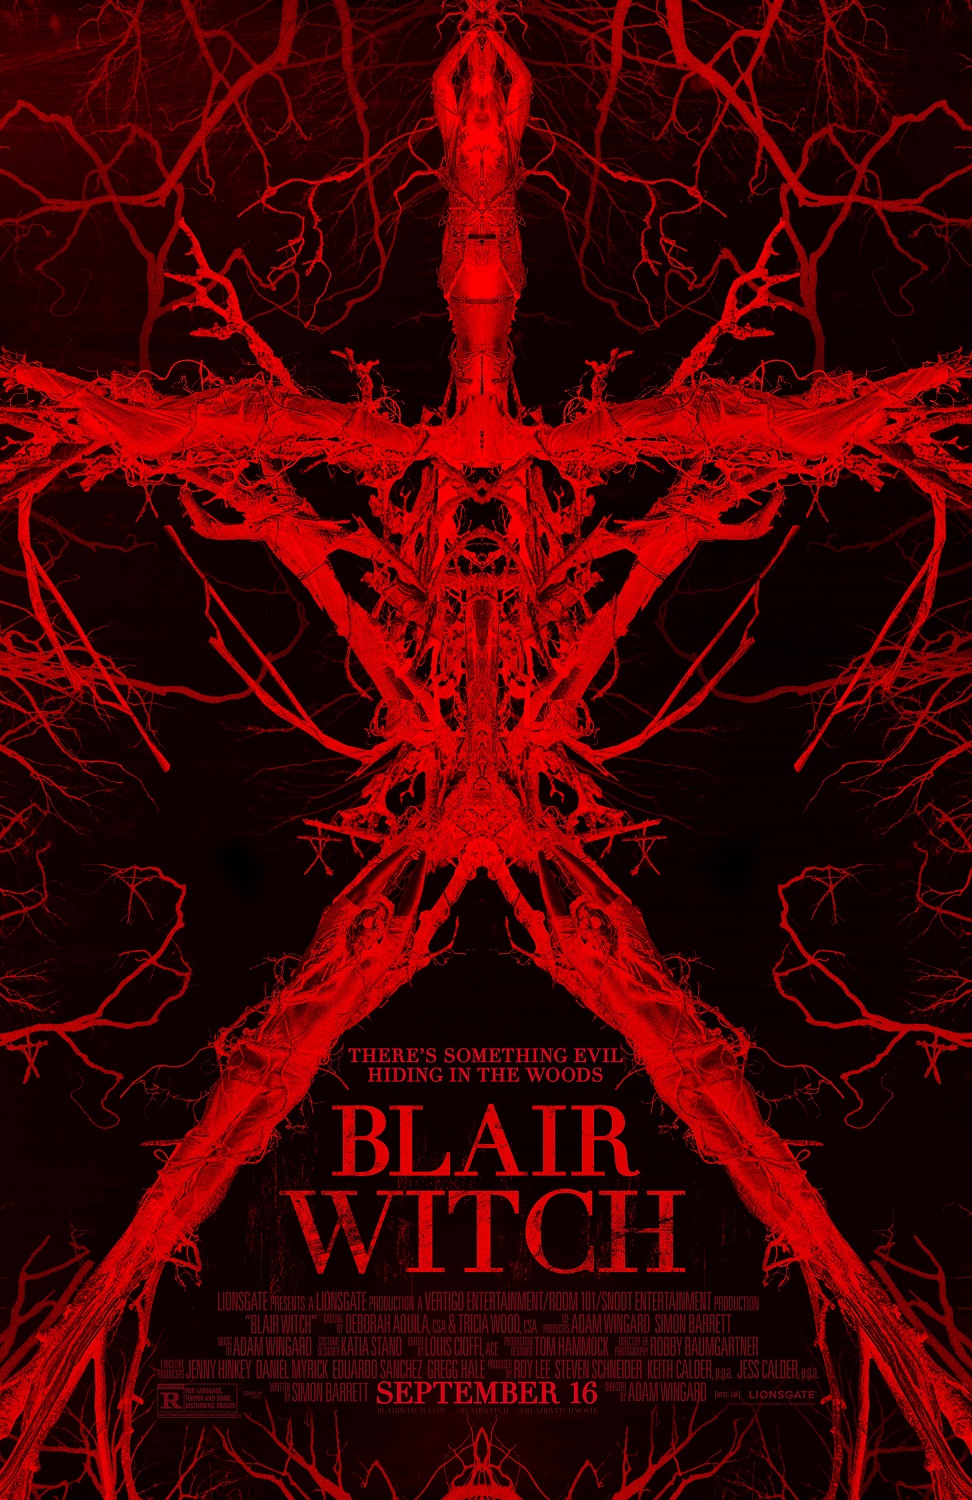 Boston & Hartford – Advance Blair Witch Screenings